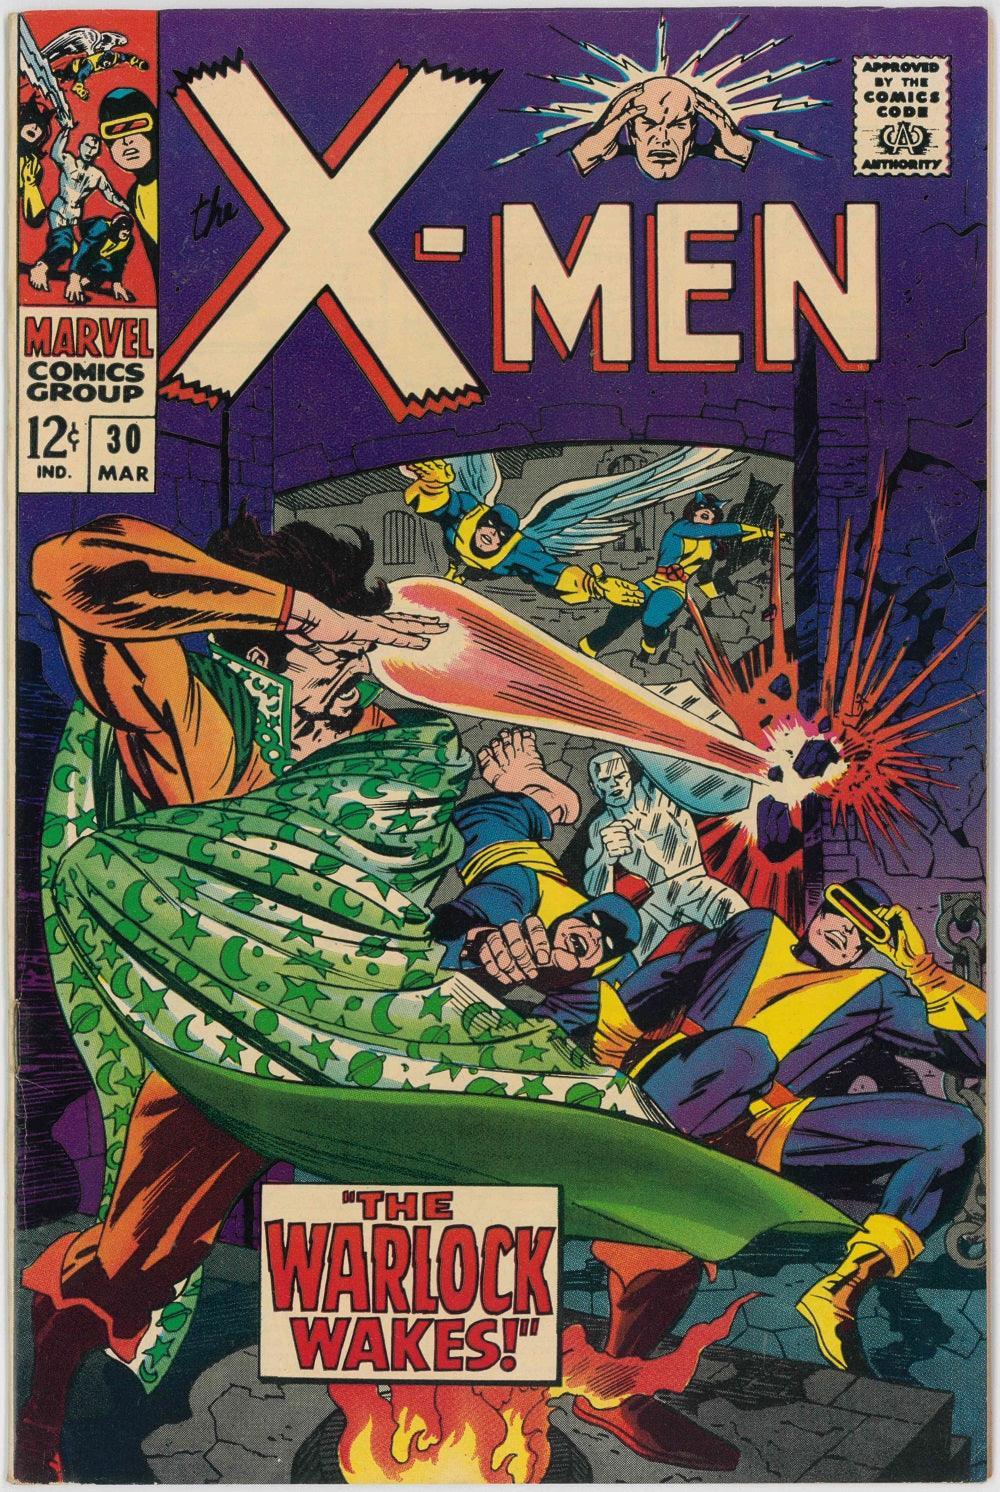 UNCANNY X-MEN (1963) #30 (VF/NM) - Kings Comics